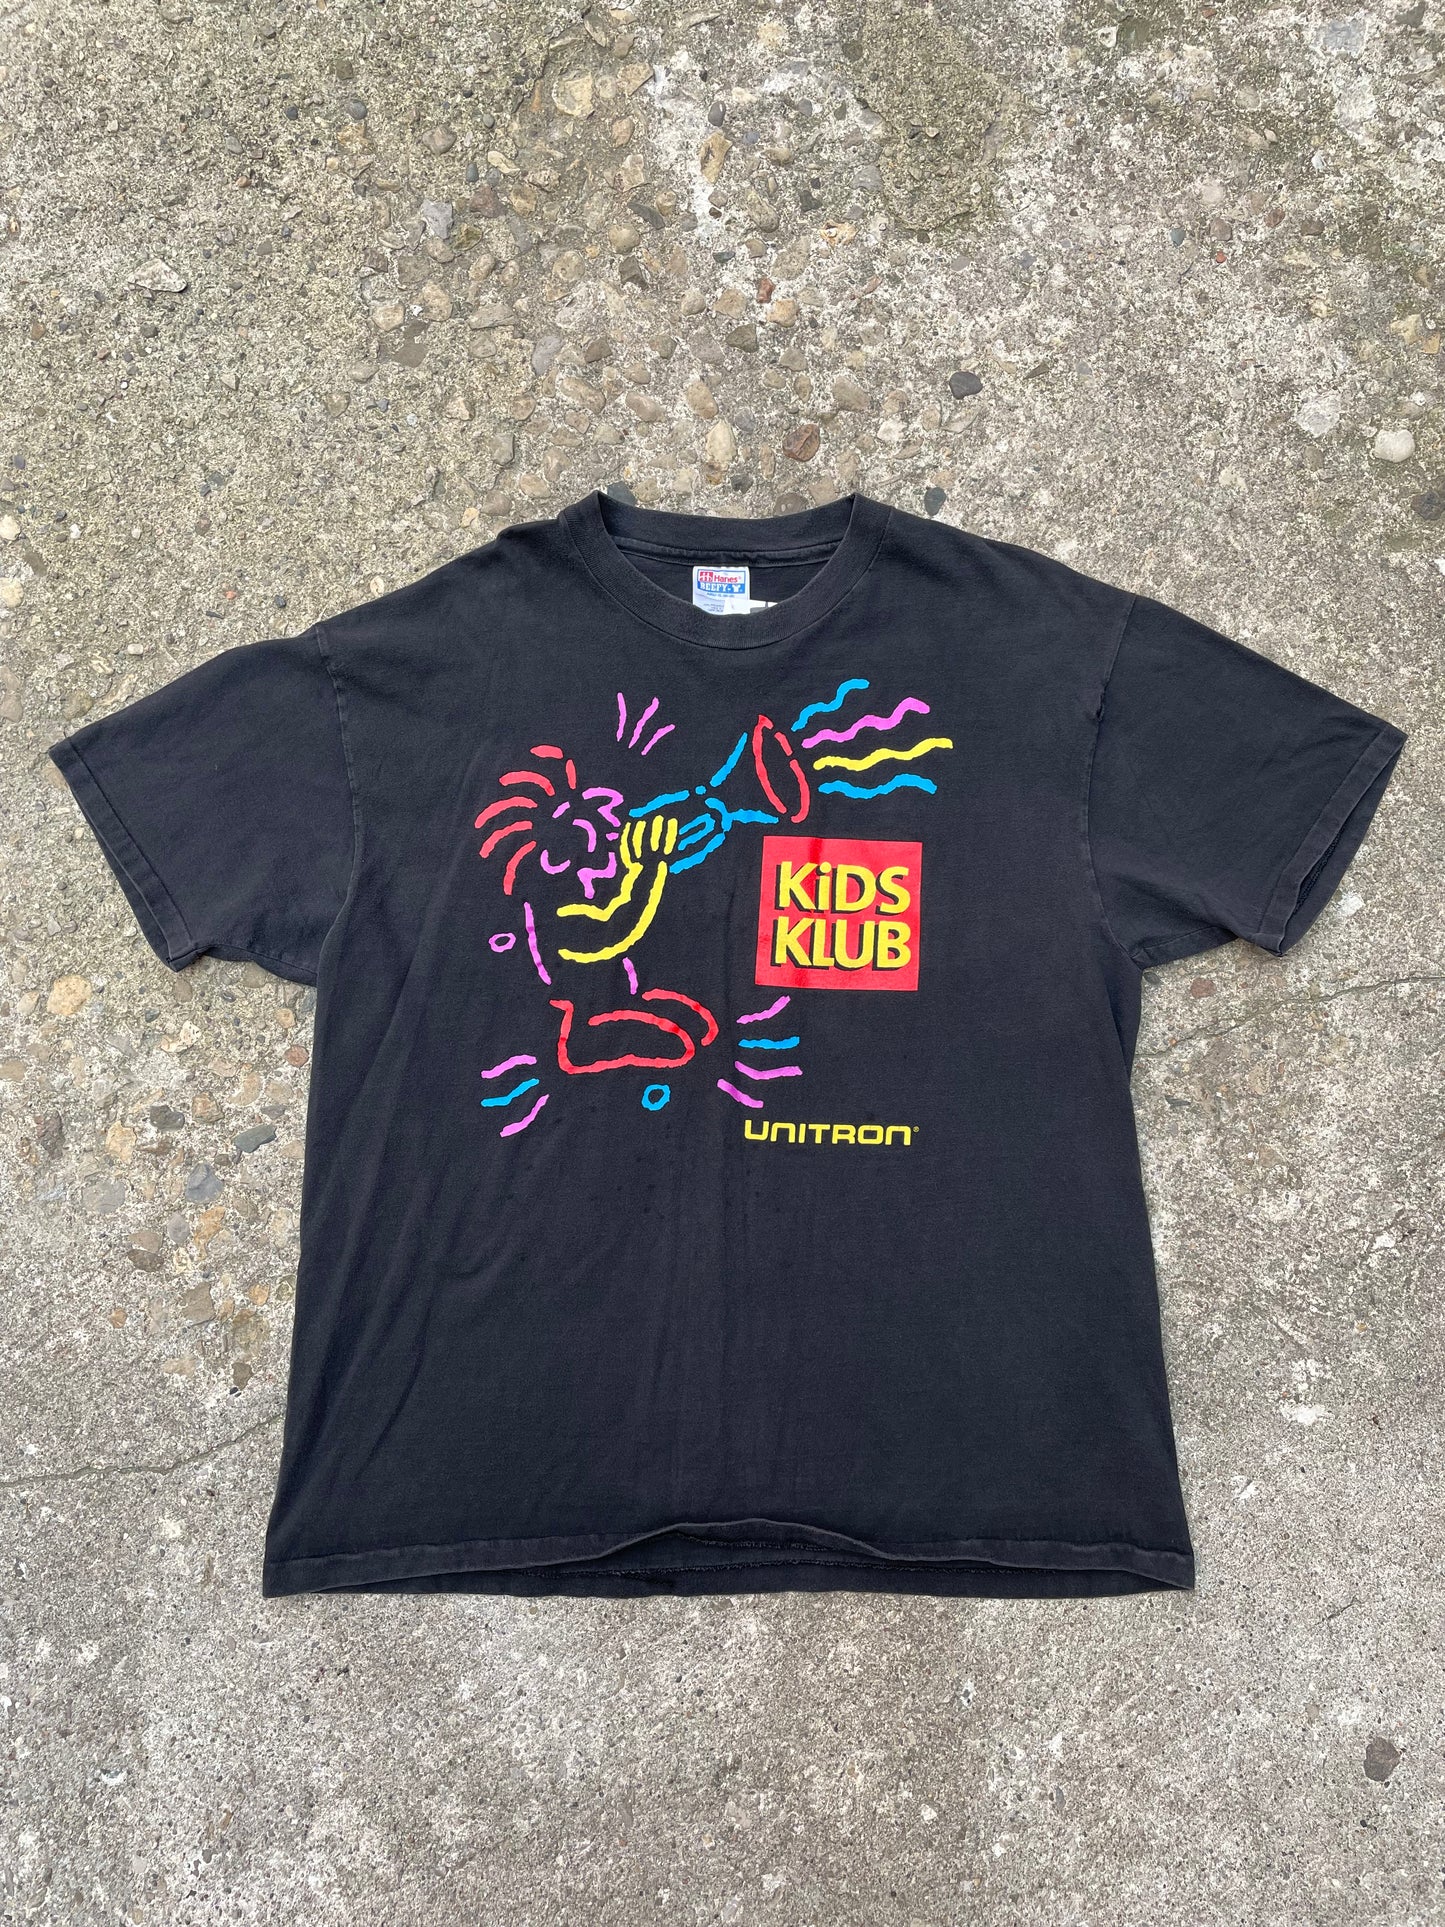 1990's Unitron Kids Klub Graphic T-Shirt - XL